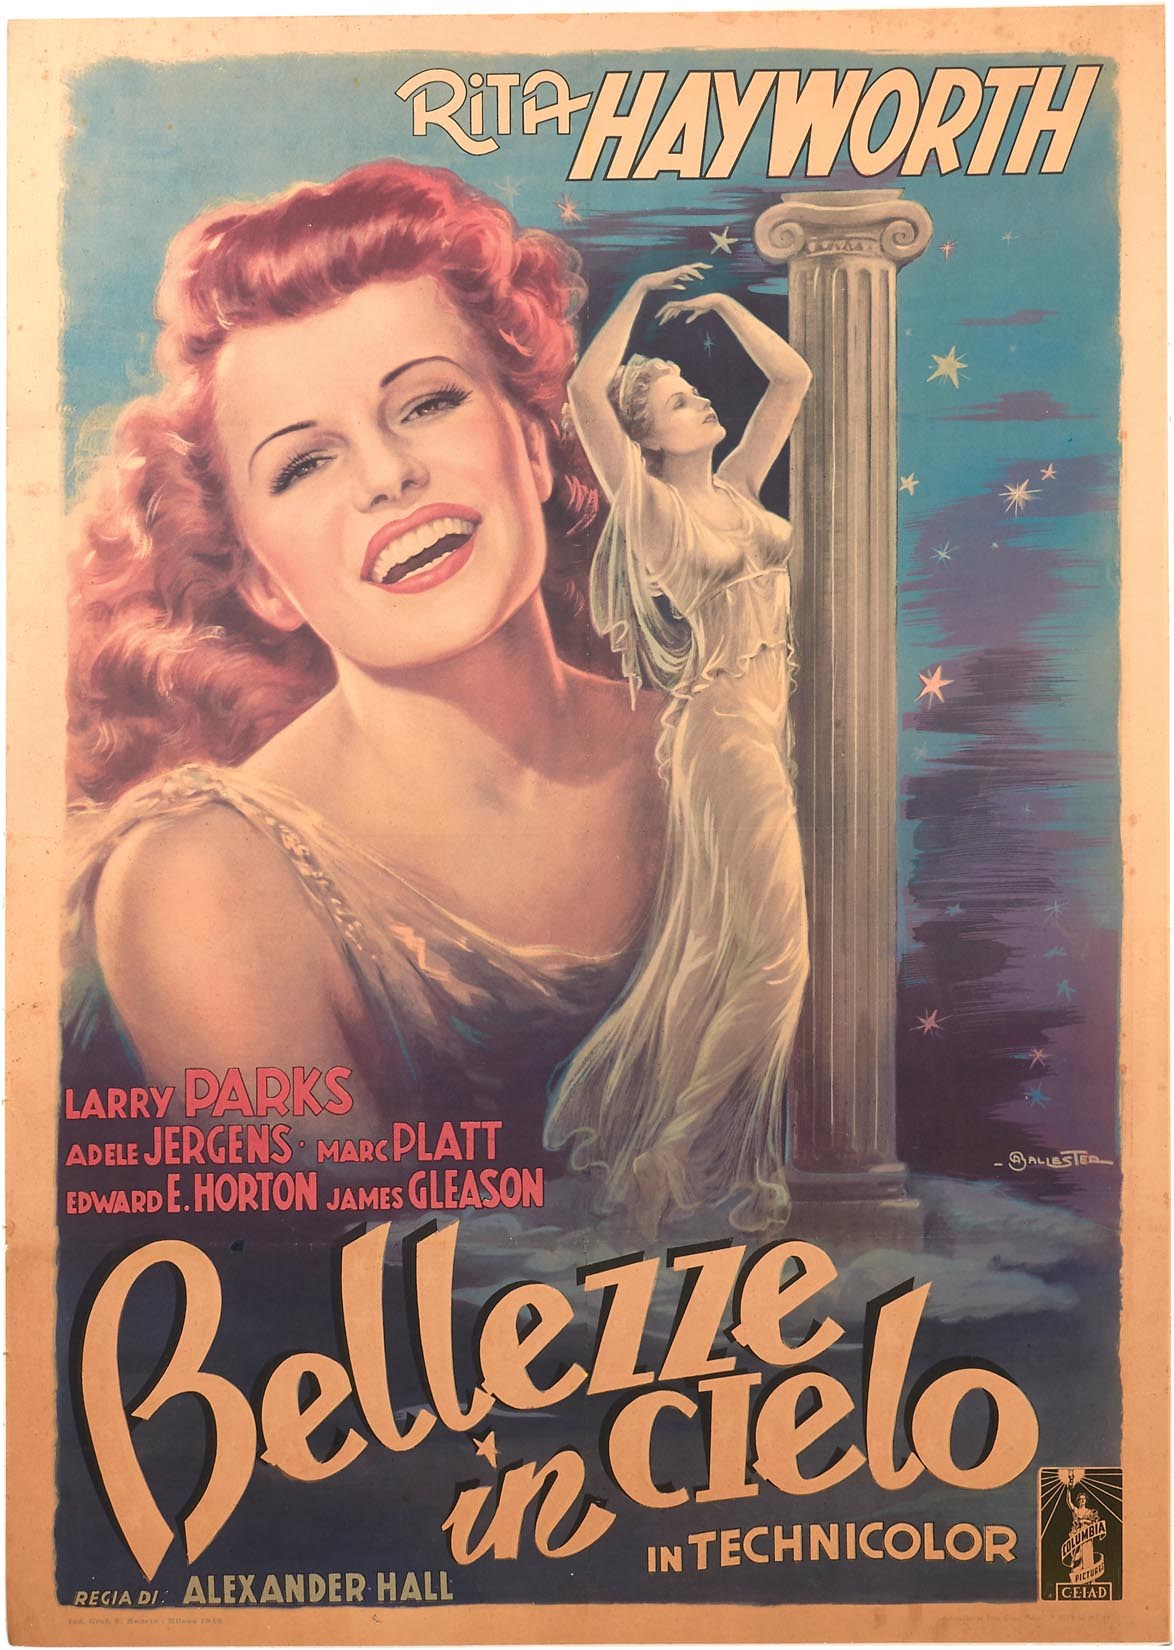 1947 Rita Hayworth "Down to Earth" (Bellezze in Cielo) Movie Poster